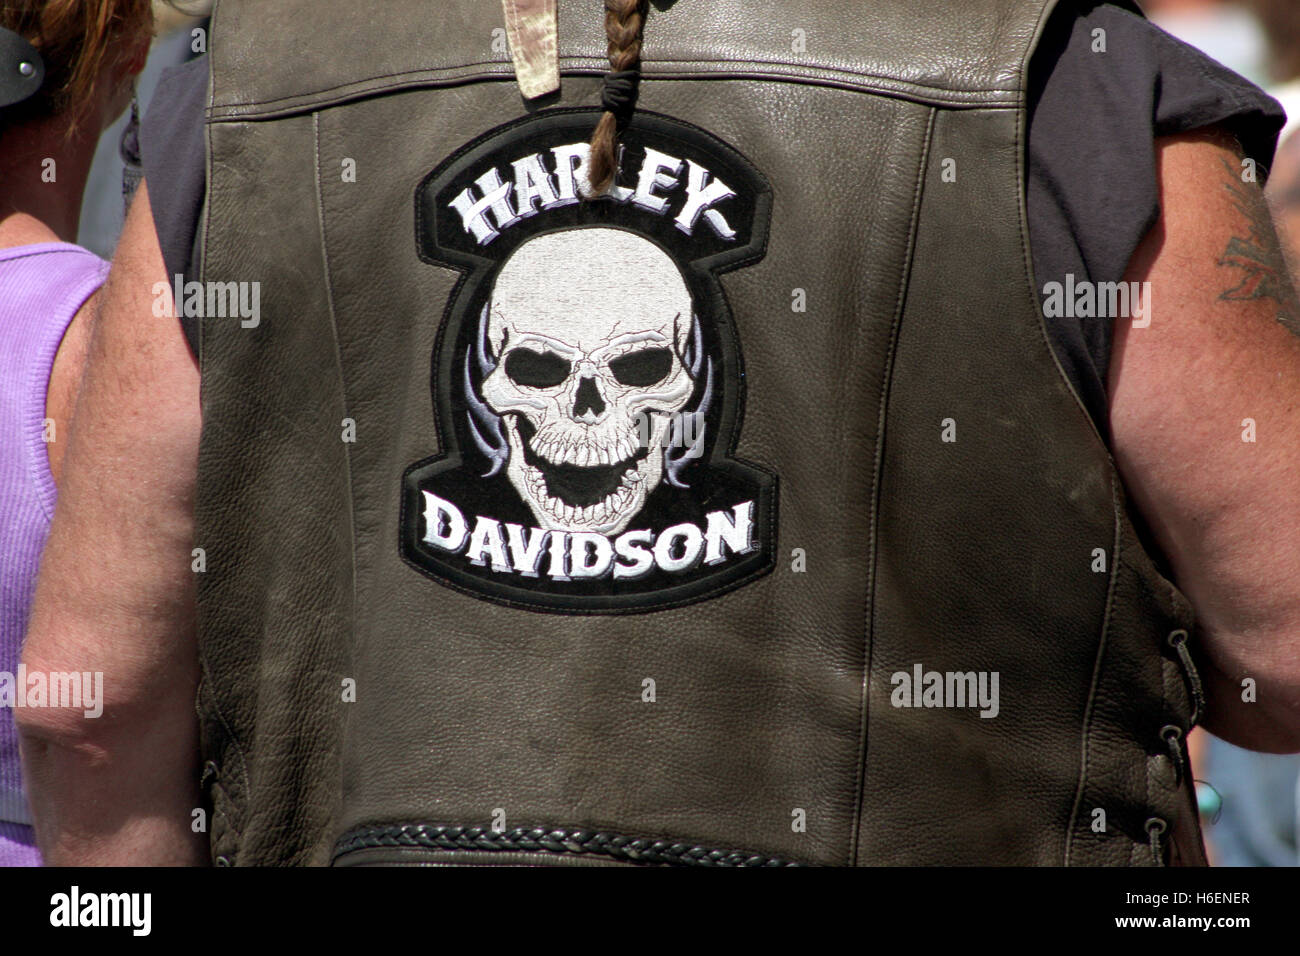 Skull design on back of Harley Davidson motorcycle vest worn by man Stock  Photo - Alamy